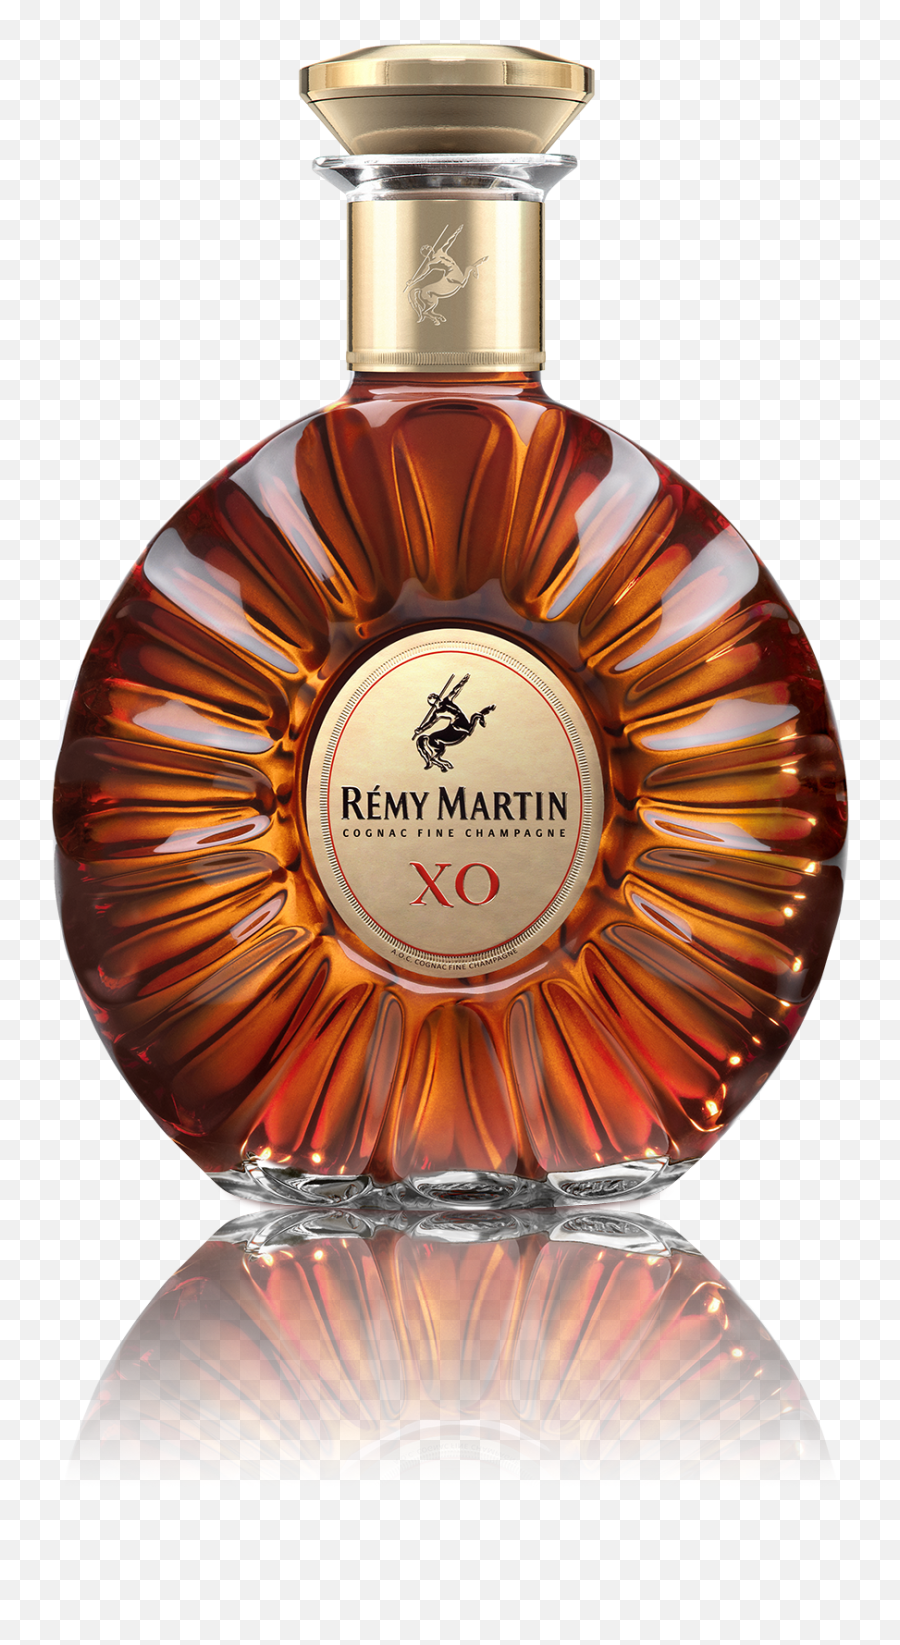 Rm Xo Packshot 70 - Remy Martin Xo Emoji,Champagne Bottle Emoji